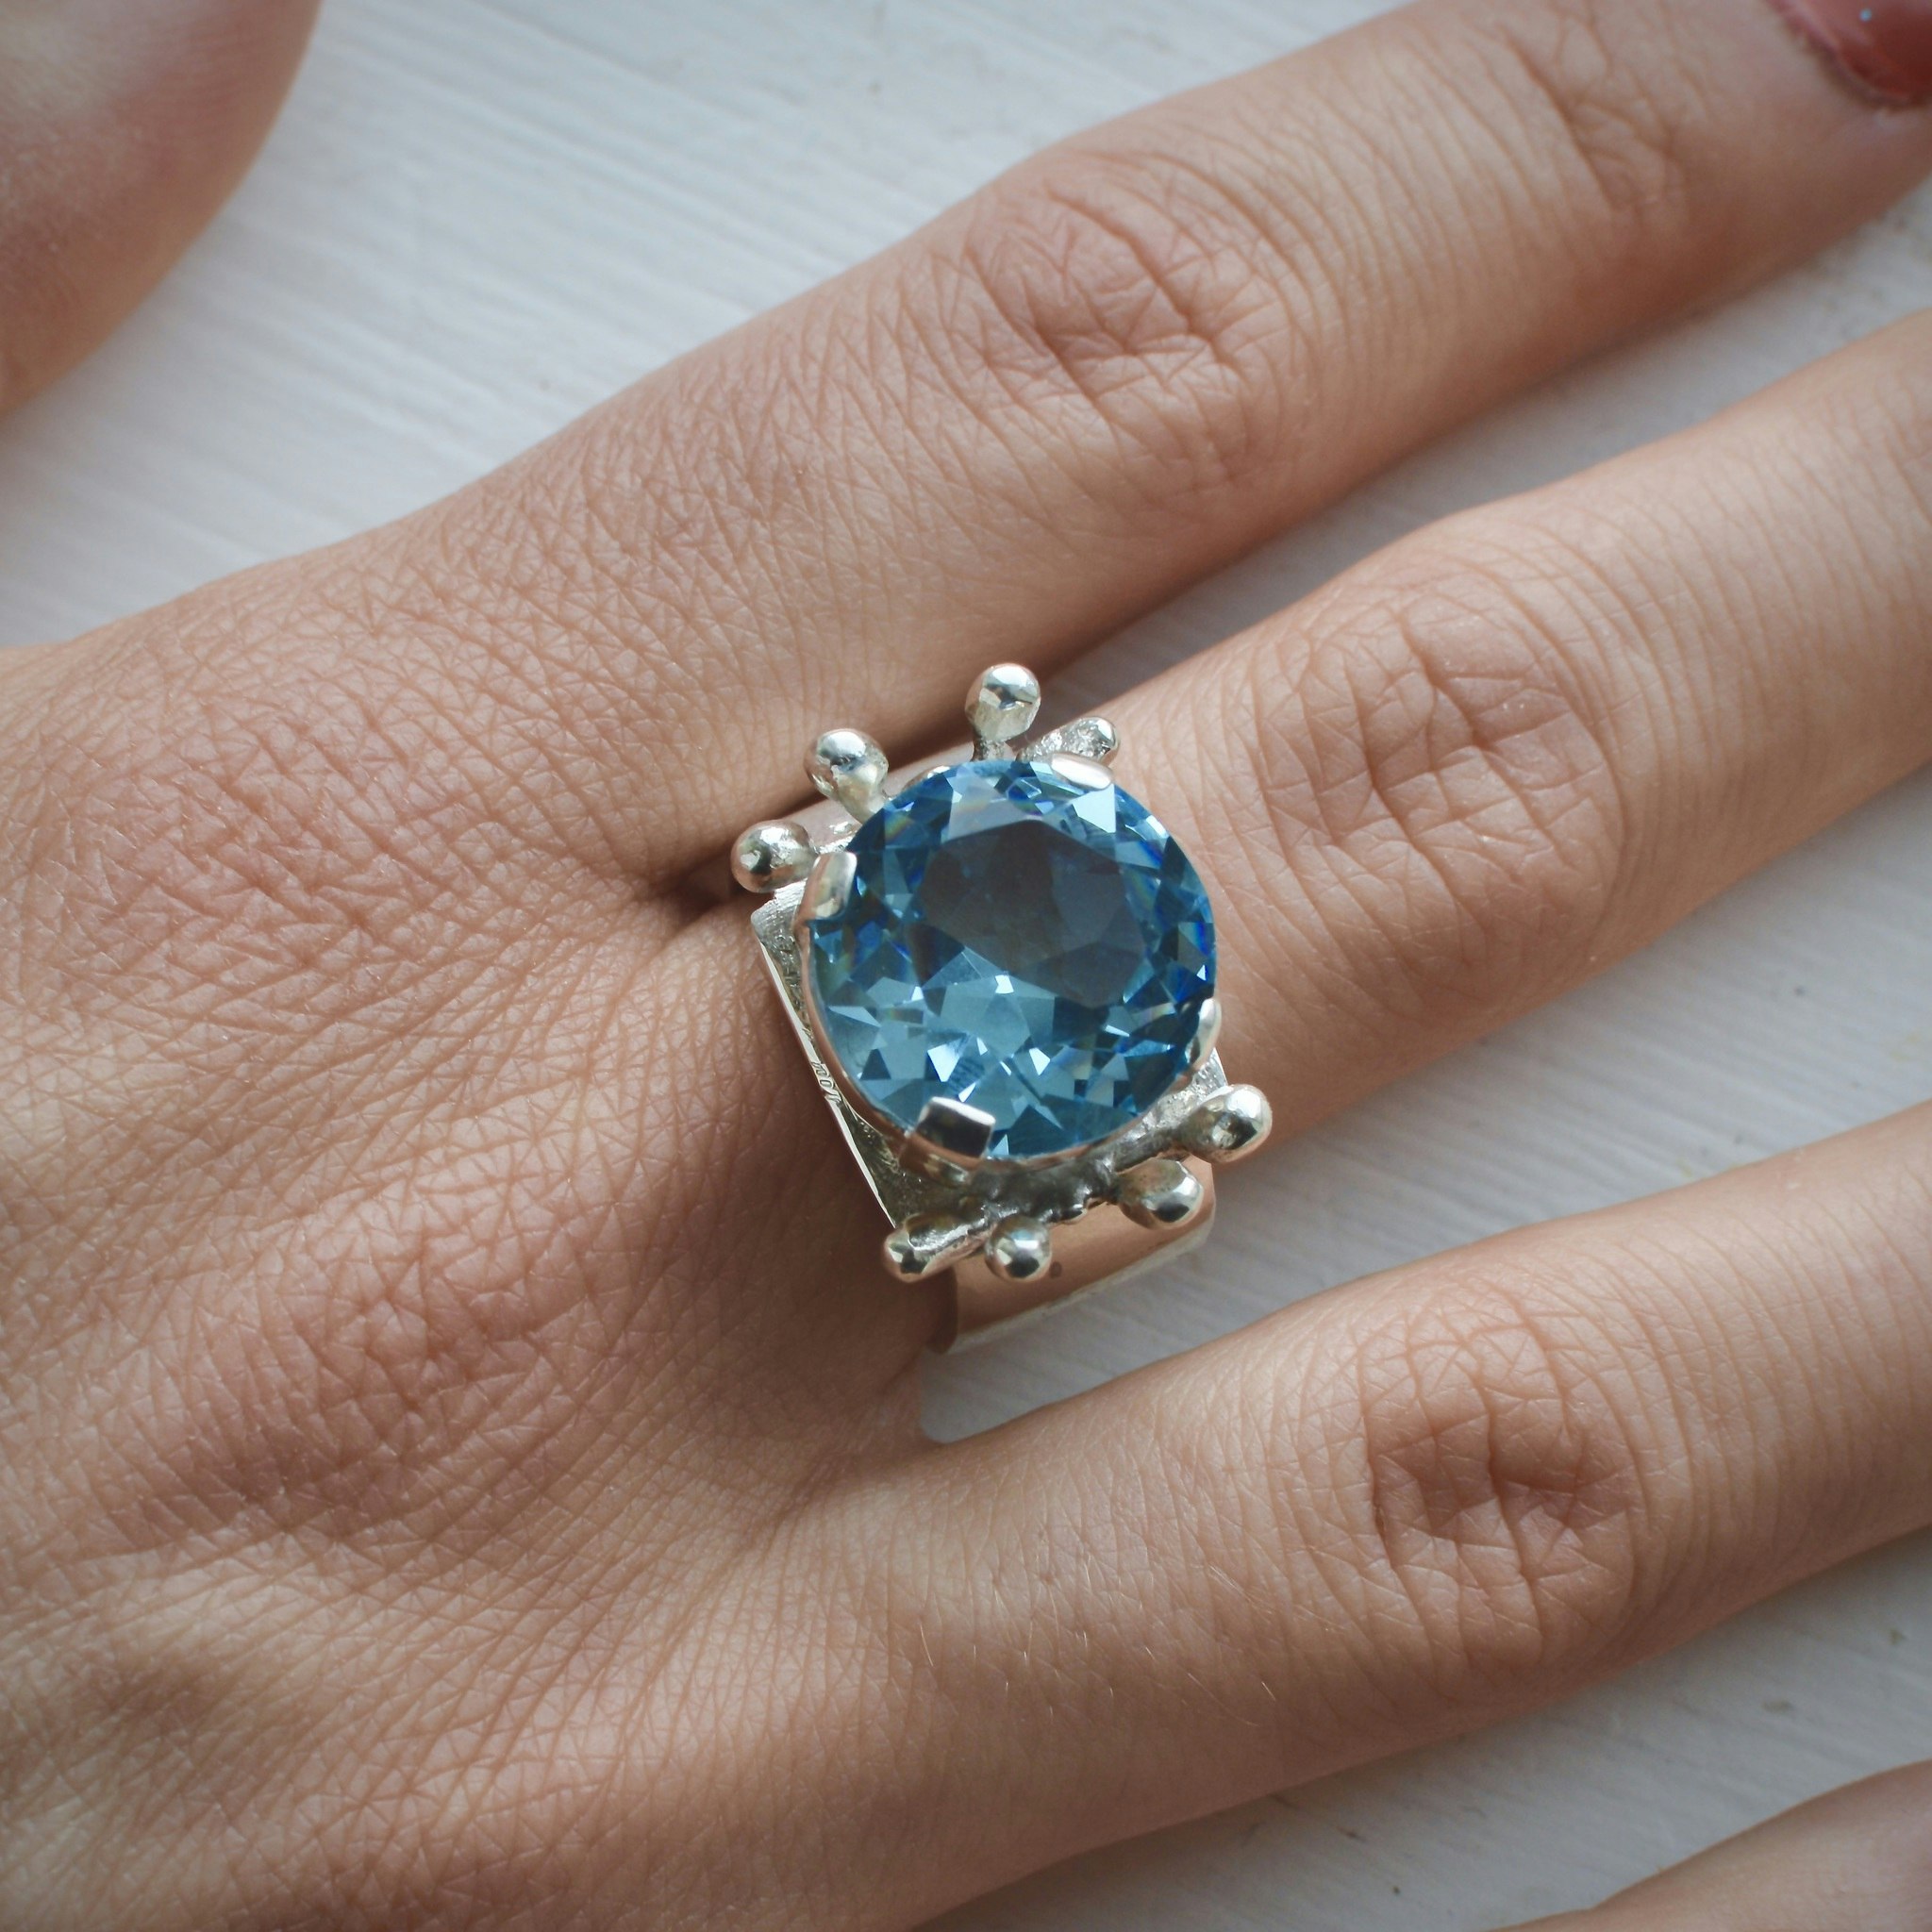 Statement ring, cocktail ring, aquamarine ring, chunky ring, ring of light